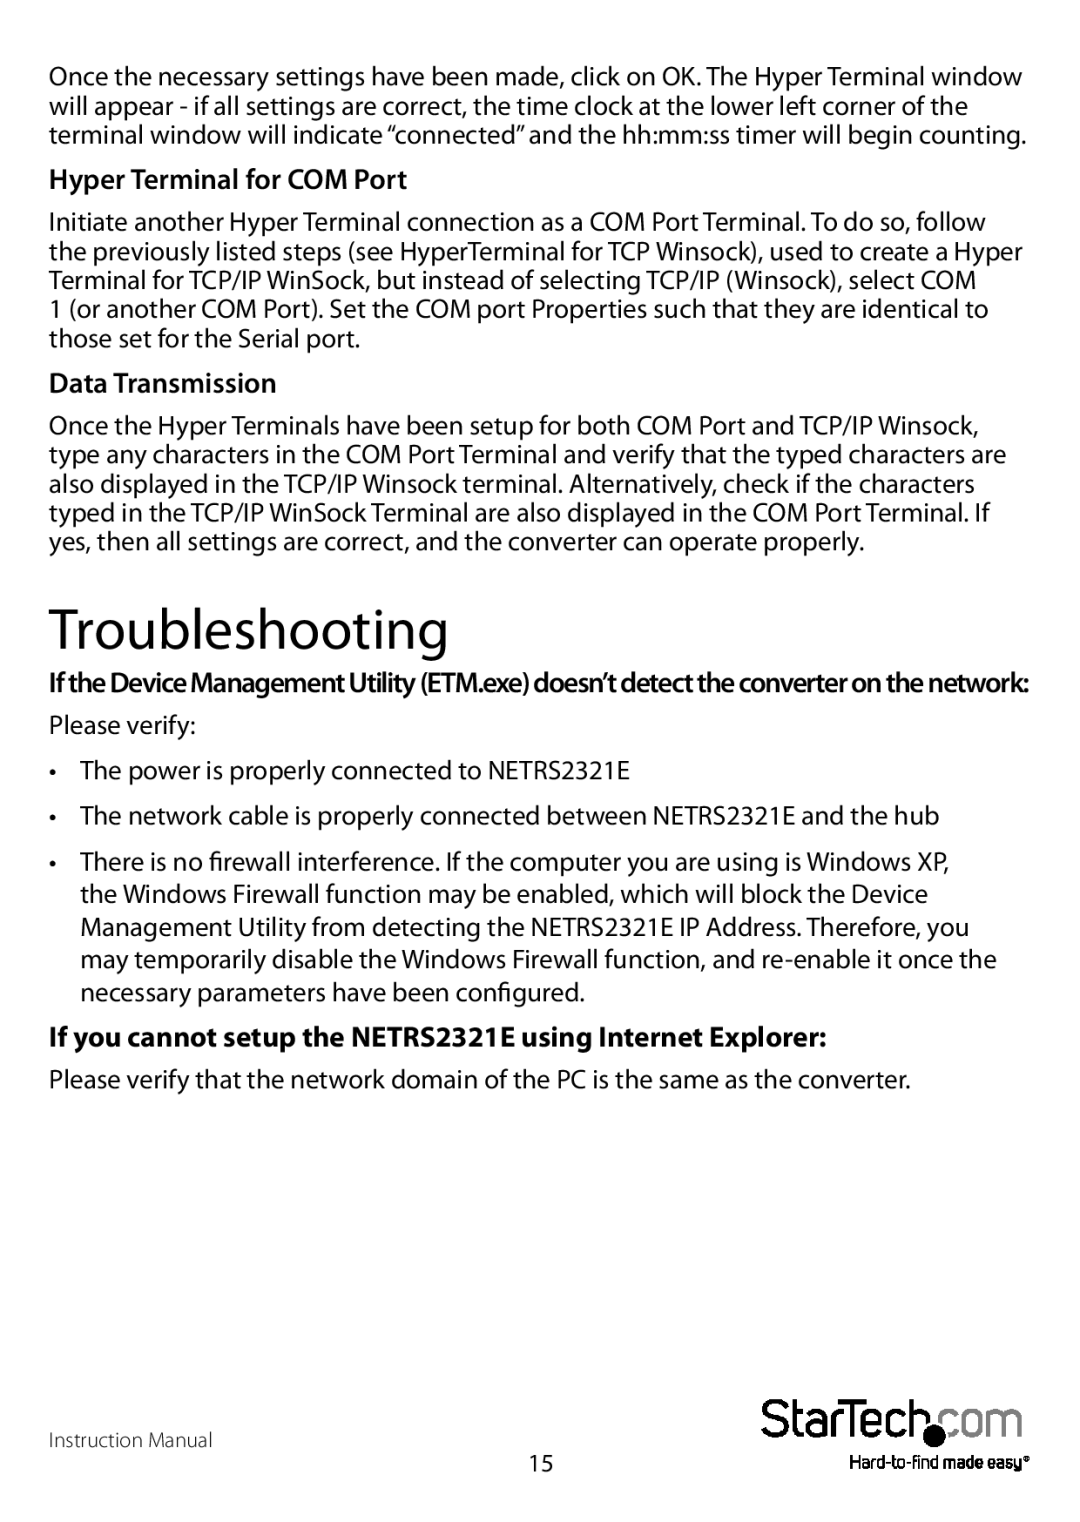 StarTech.com NETRS2321EGB, NETRS2321EEU manual Troubleshooting, Hyper Terminal for COM Port, Data Transmission 